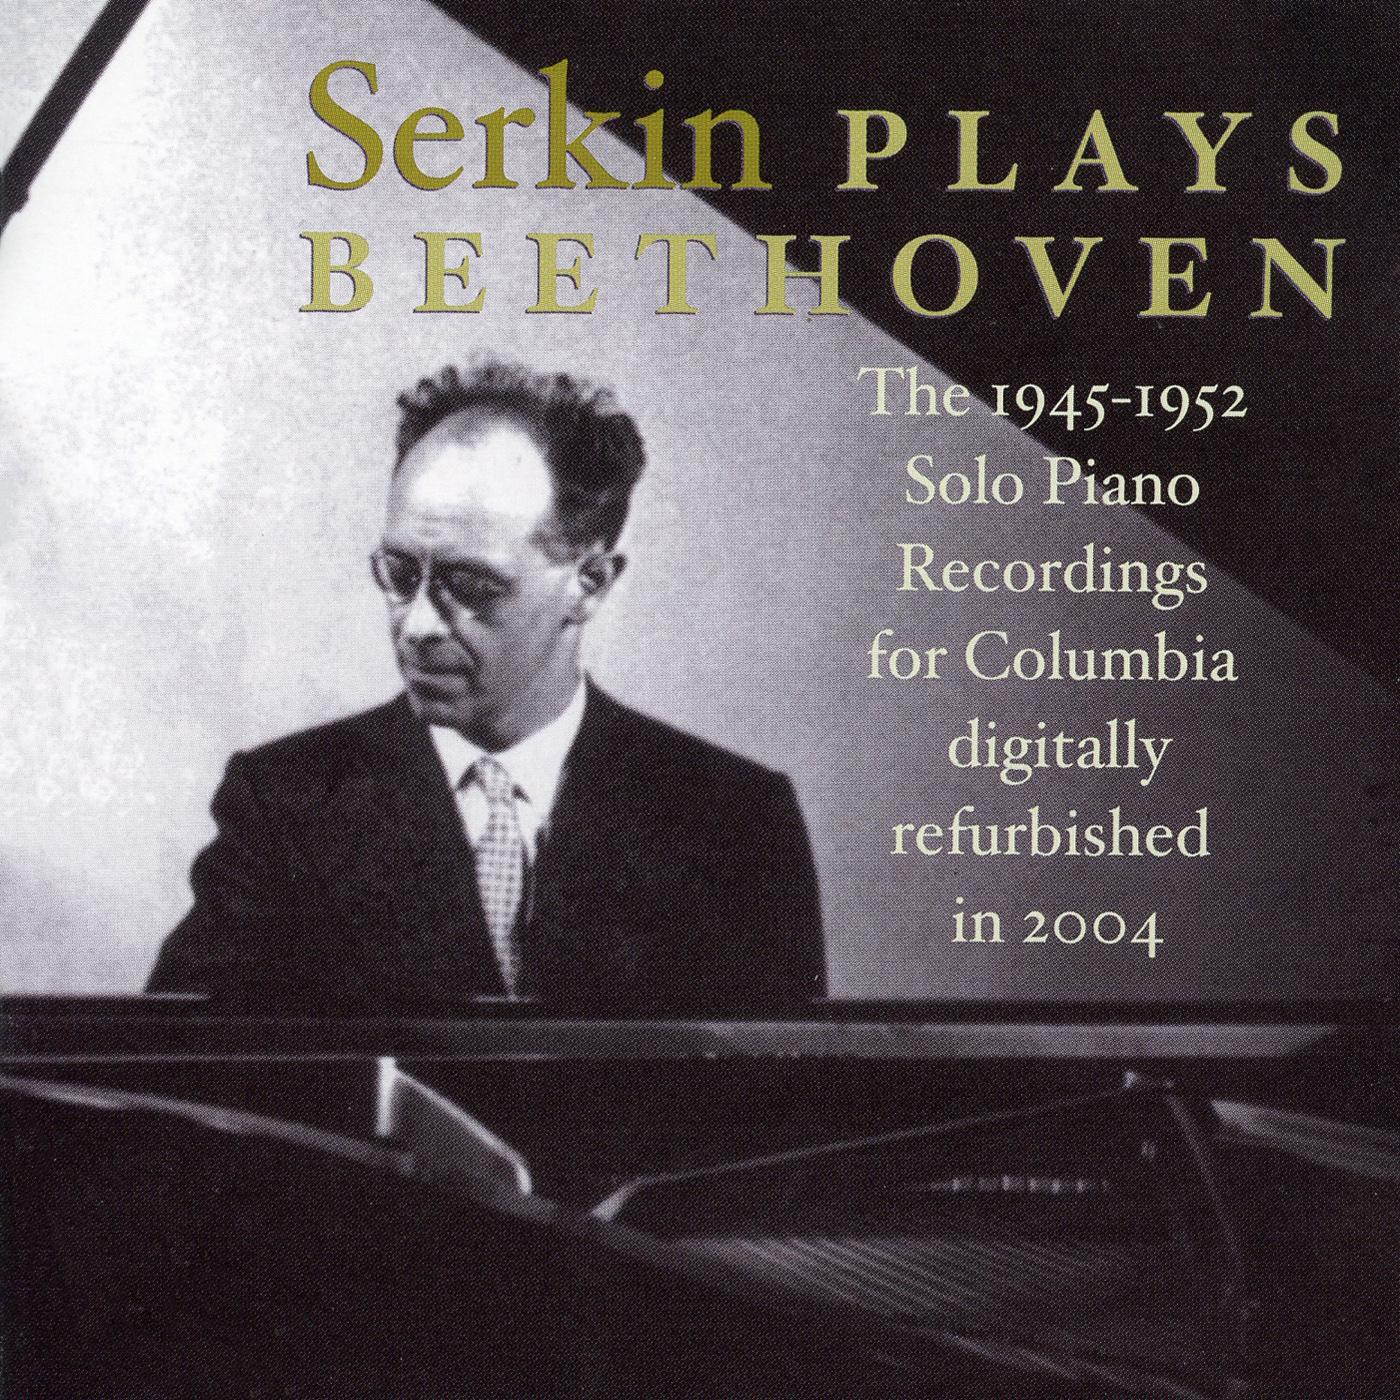 BEETHOVEN, L. van: Piano Sonatas Nos. 8, 14, 21, 13, 24, 26 and 30 / Fantasia, Op. 77 (Serkin) (1945专辑